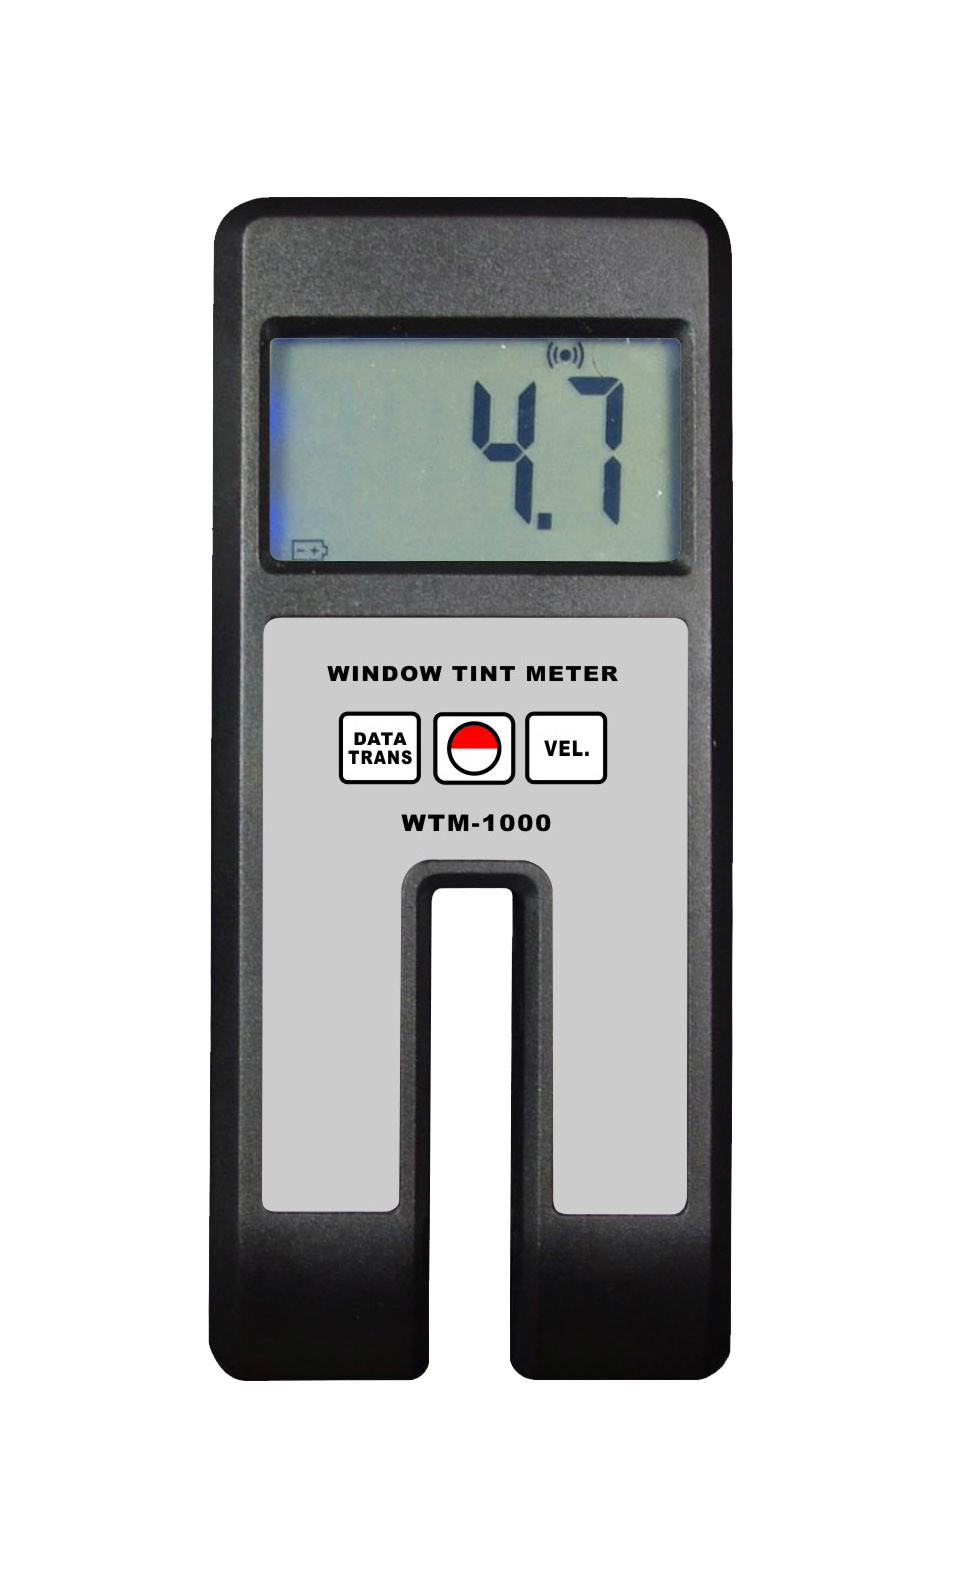 Buy cheap Window Tint Meter price WTM-1000 from wholesalers